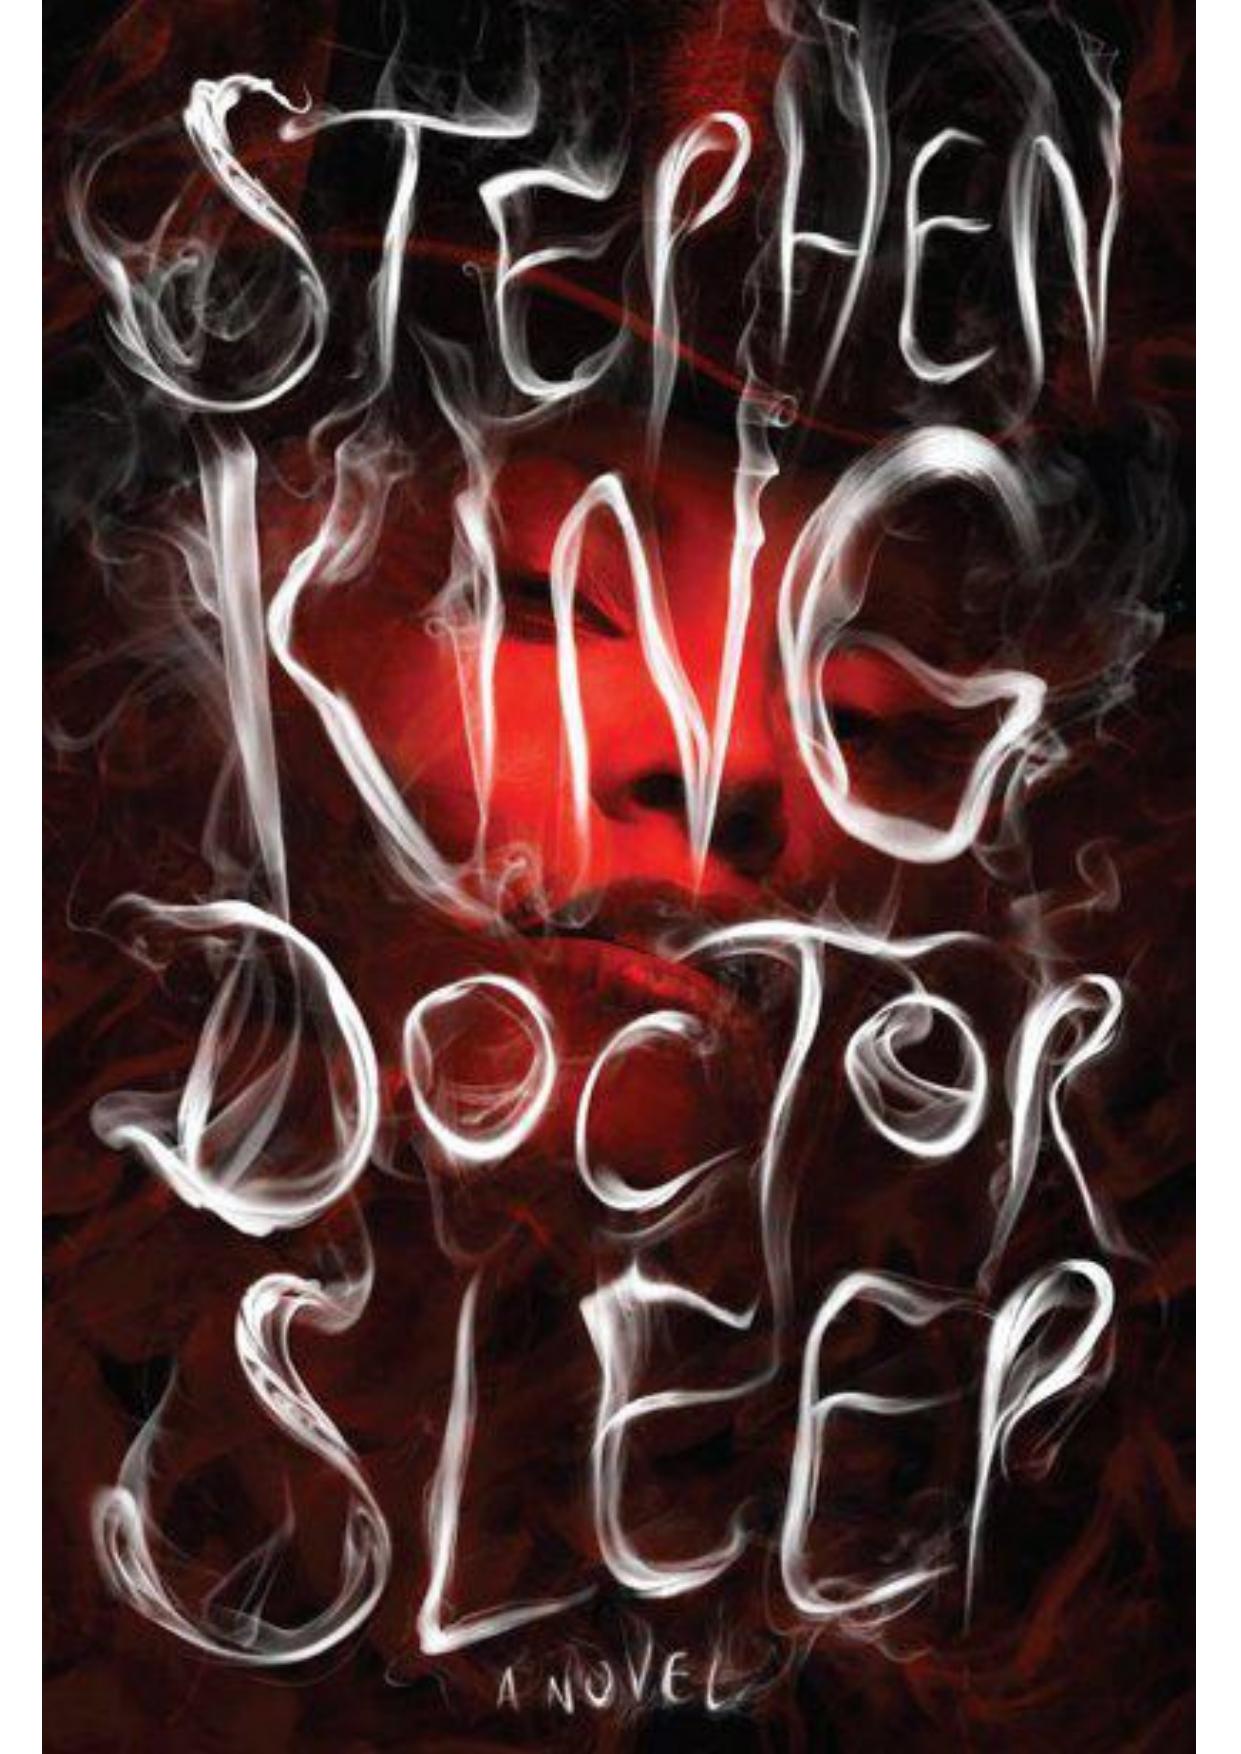 Doctor Sleep: A Novel by Stephen King